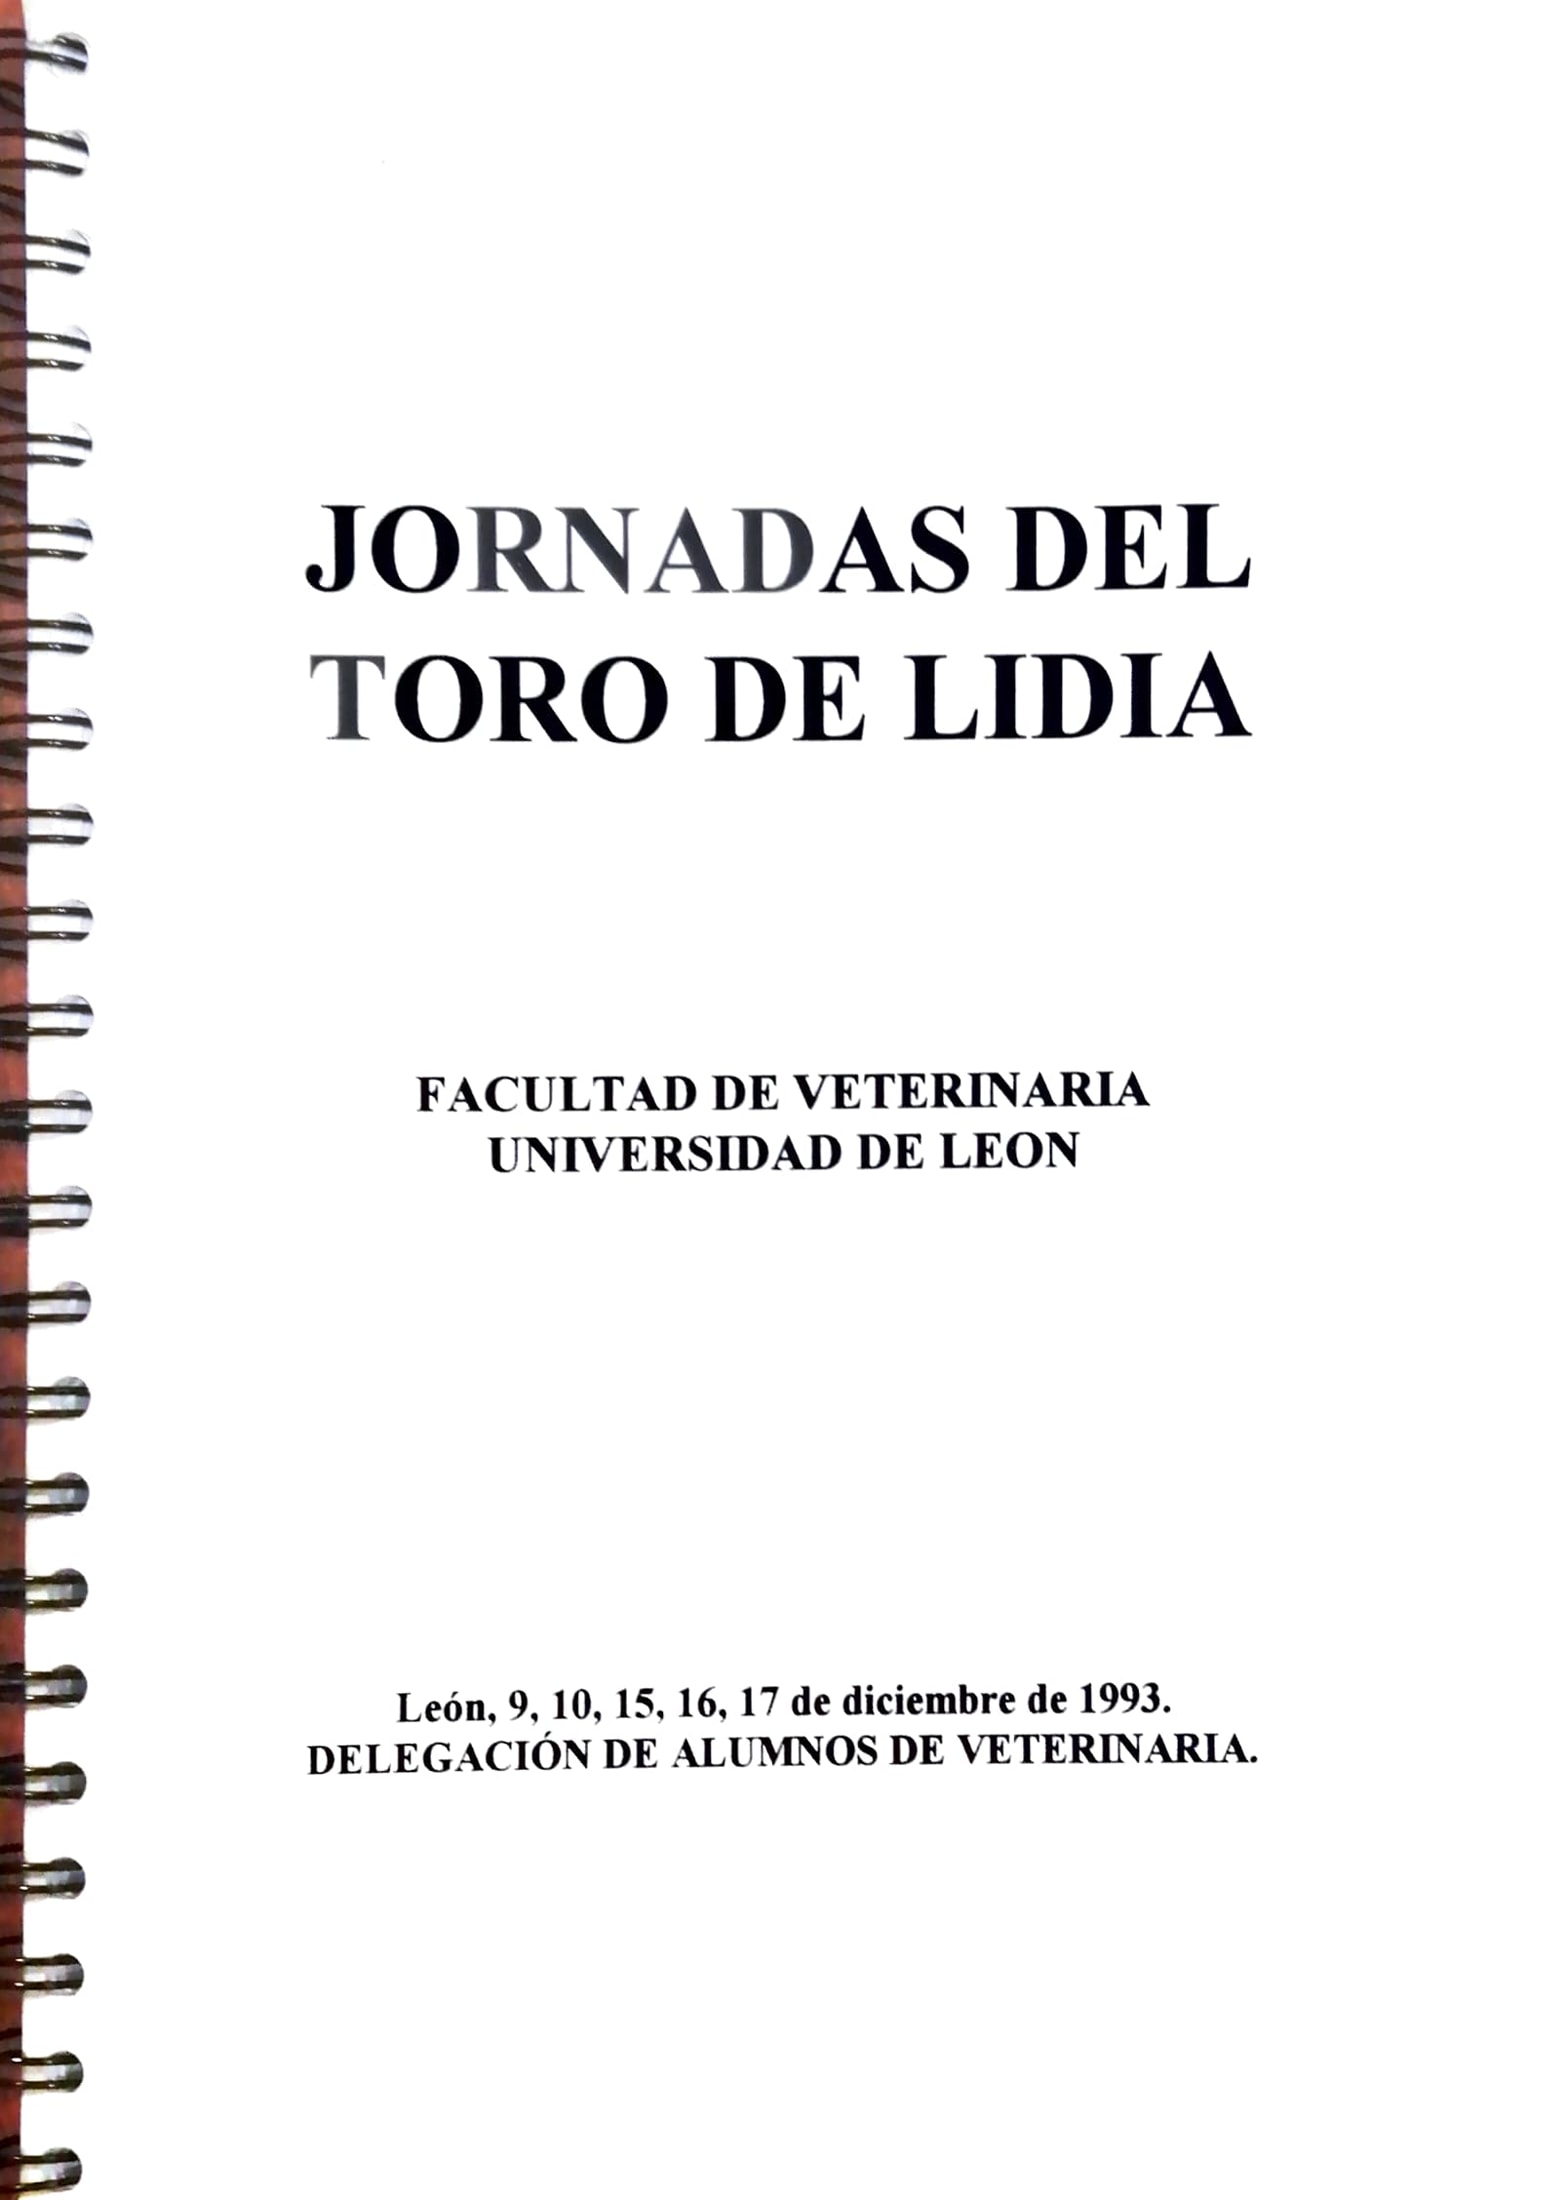 Imagen de portada del libro Jornadas del Toro de Lidia